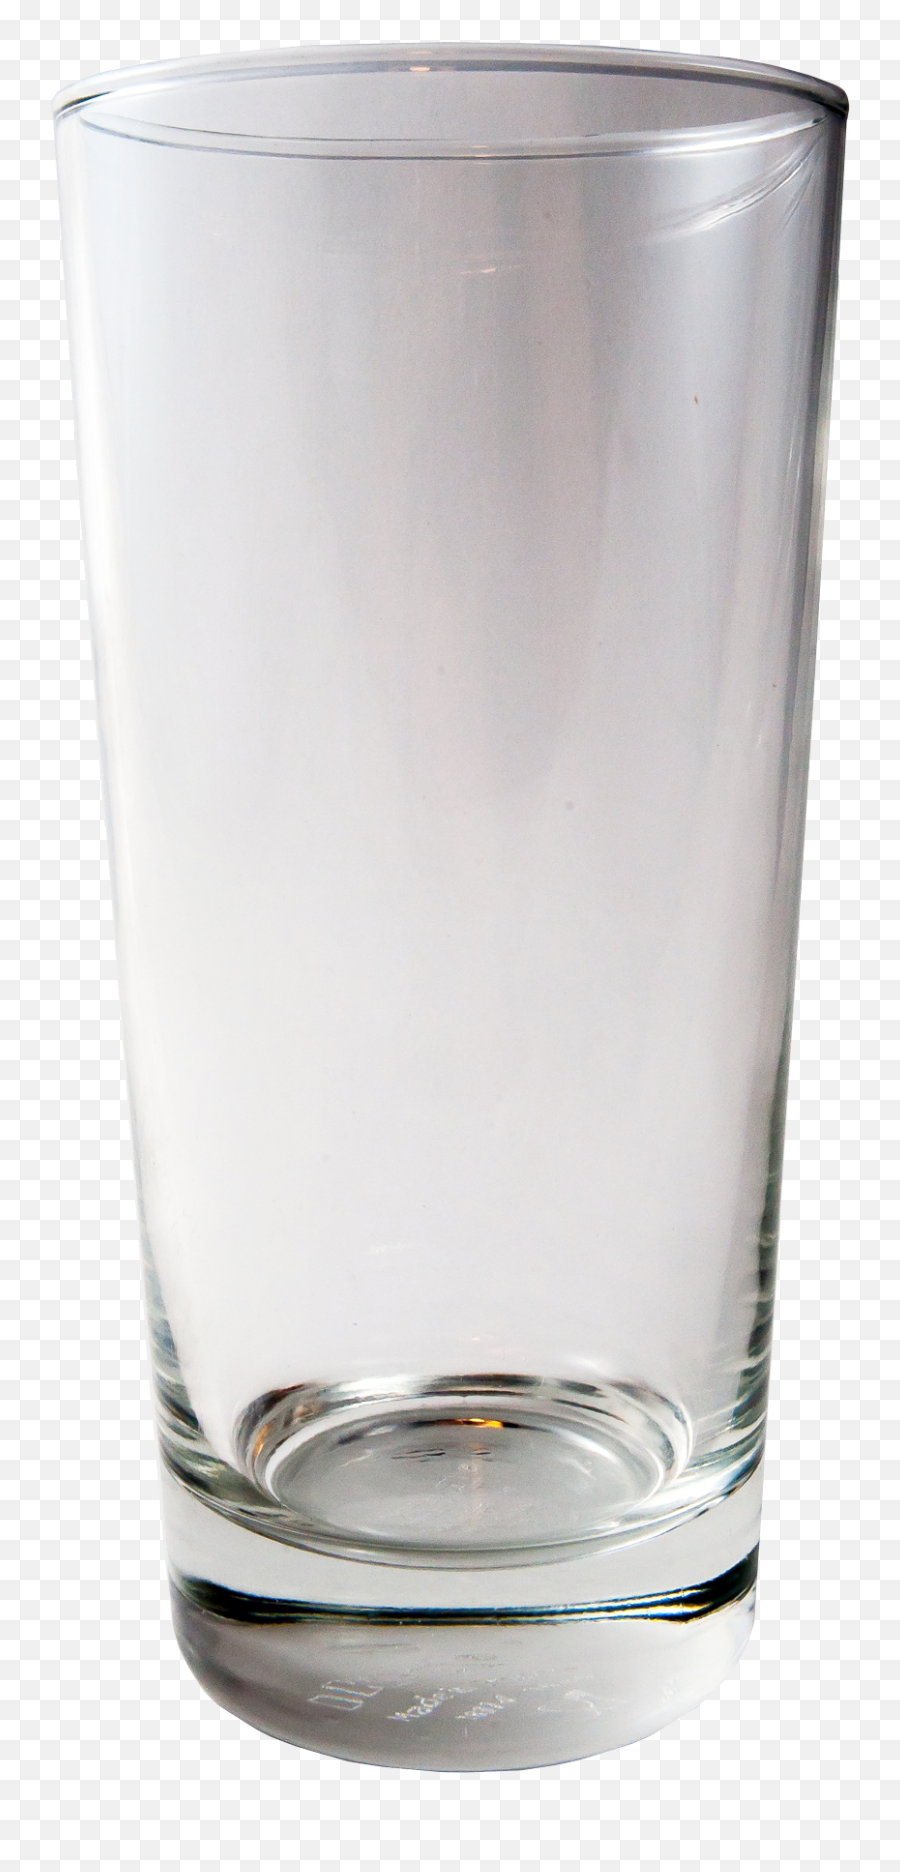 Drinking Glass Png Transparent Image - Pngpix Drinking Glass Png Transparent,Glass Cup Png